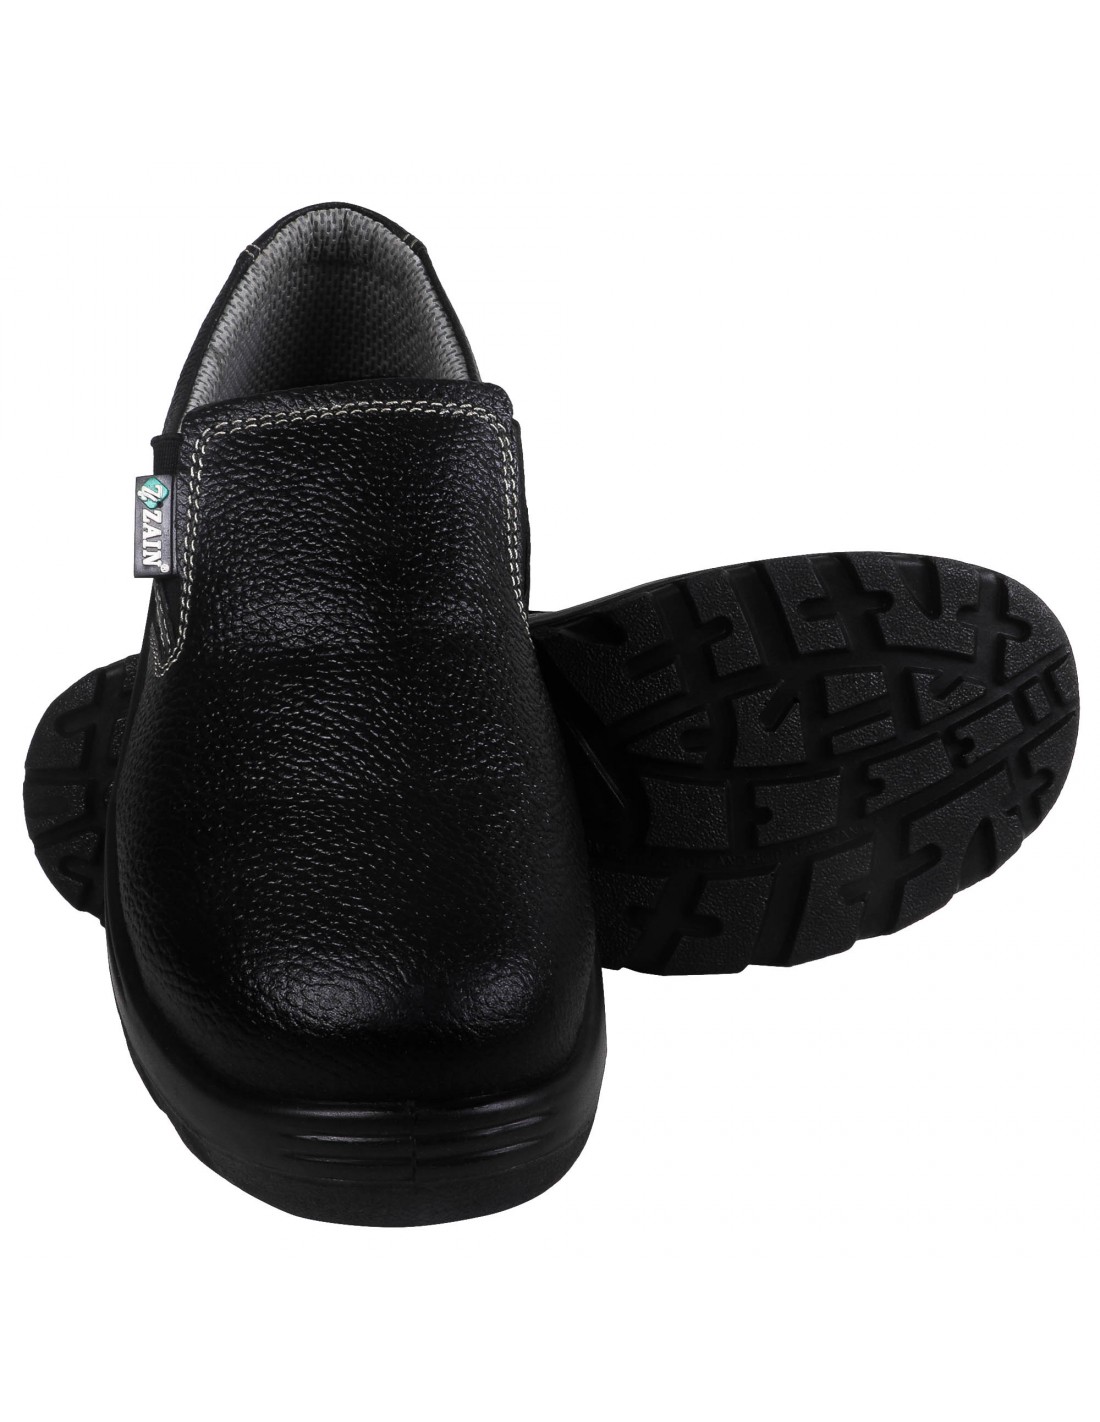 Zain ZM 08 82237 Slip-On Safety Shoe for Men, ISI Marked